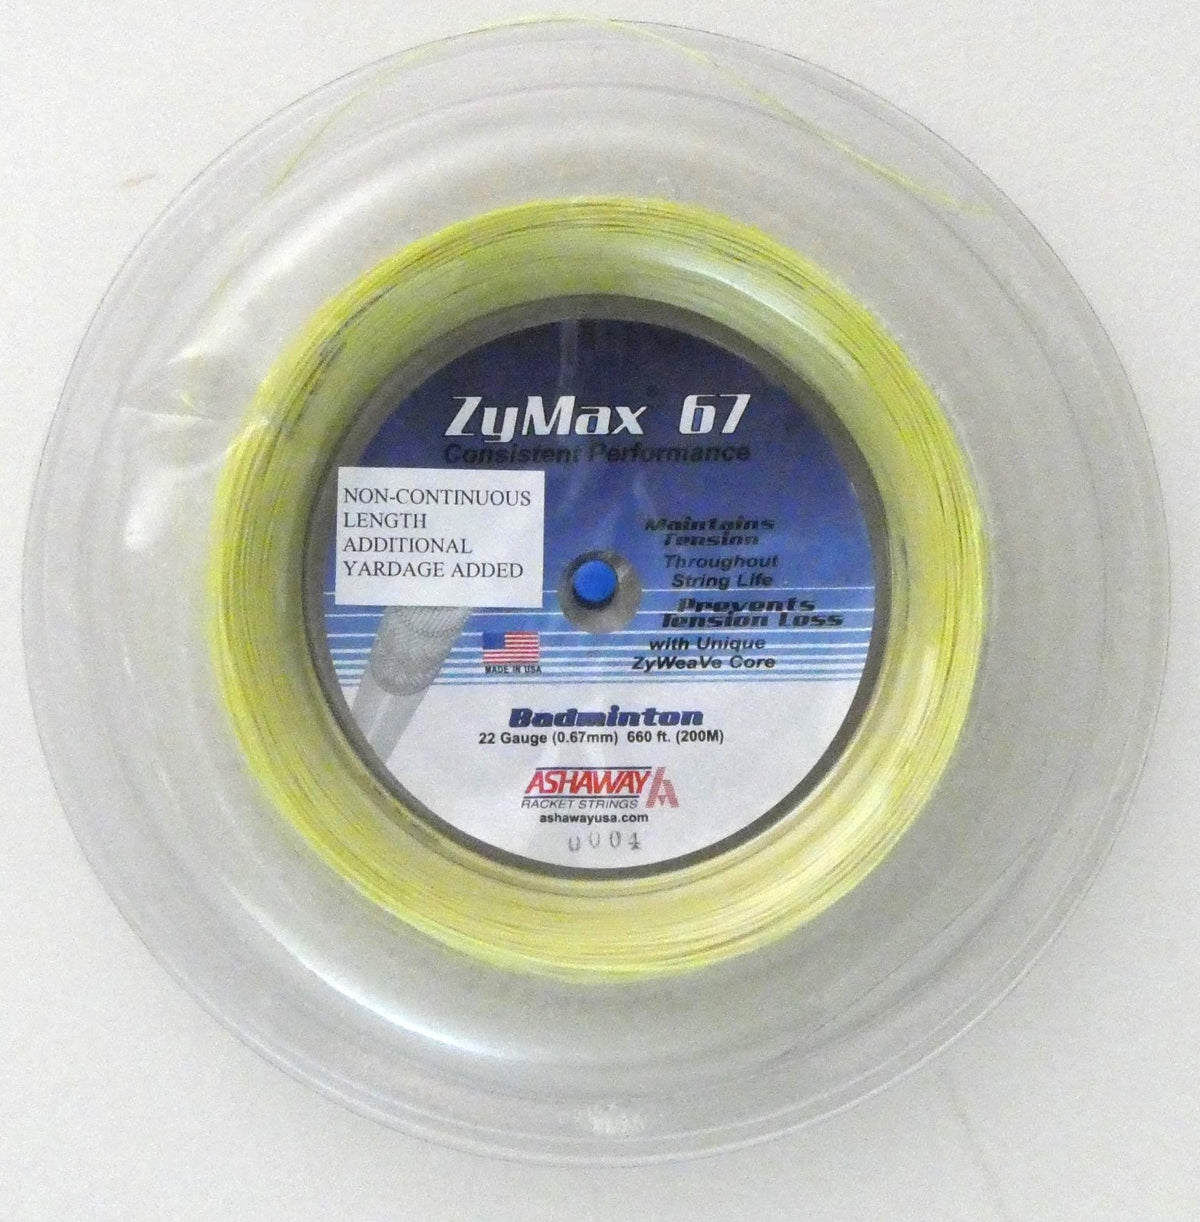 Ashaway ZyMax 67 Badminton String, Neon Yellow, 200 M REEL